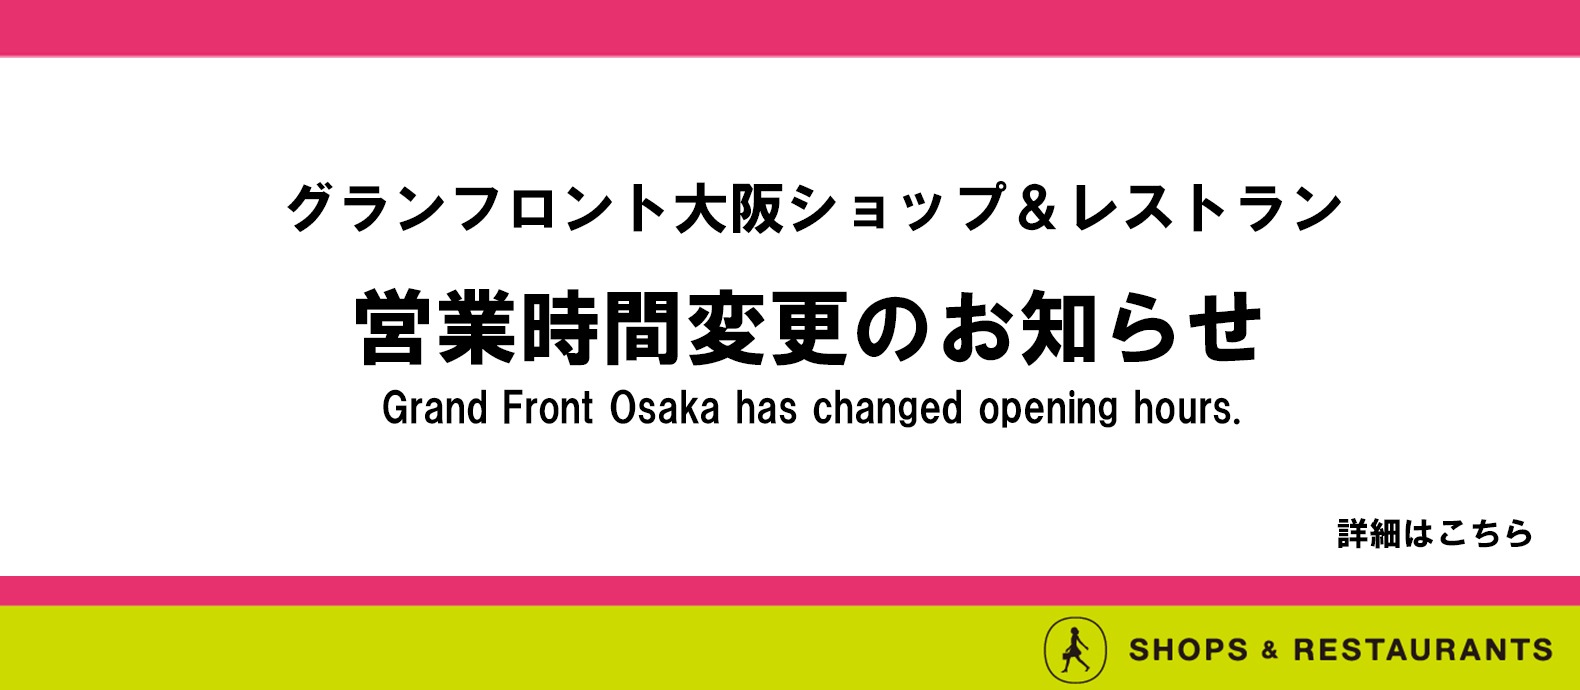 GRAND FRONT OSAKA SHOPS  RESTAURANTS